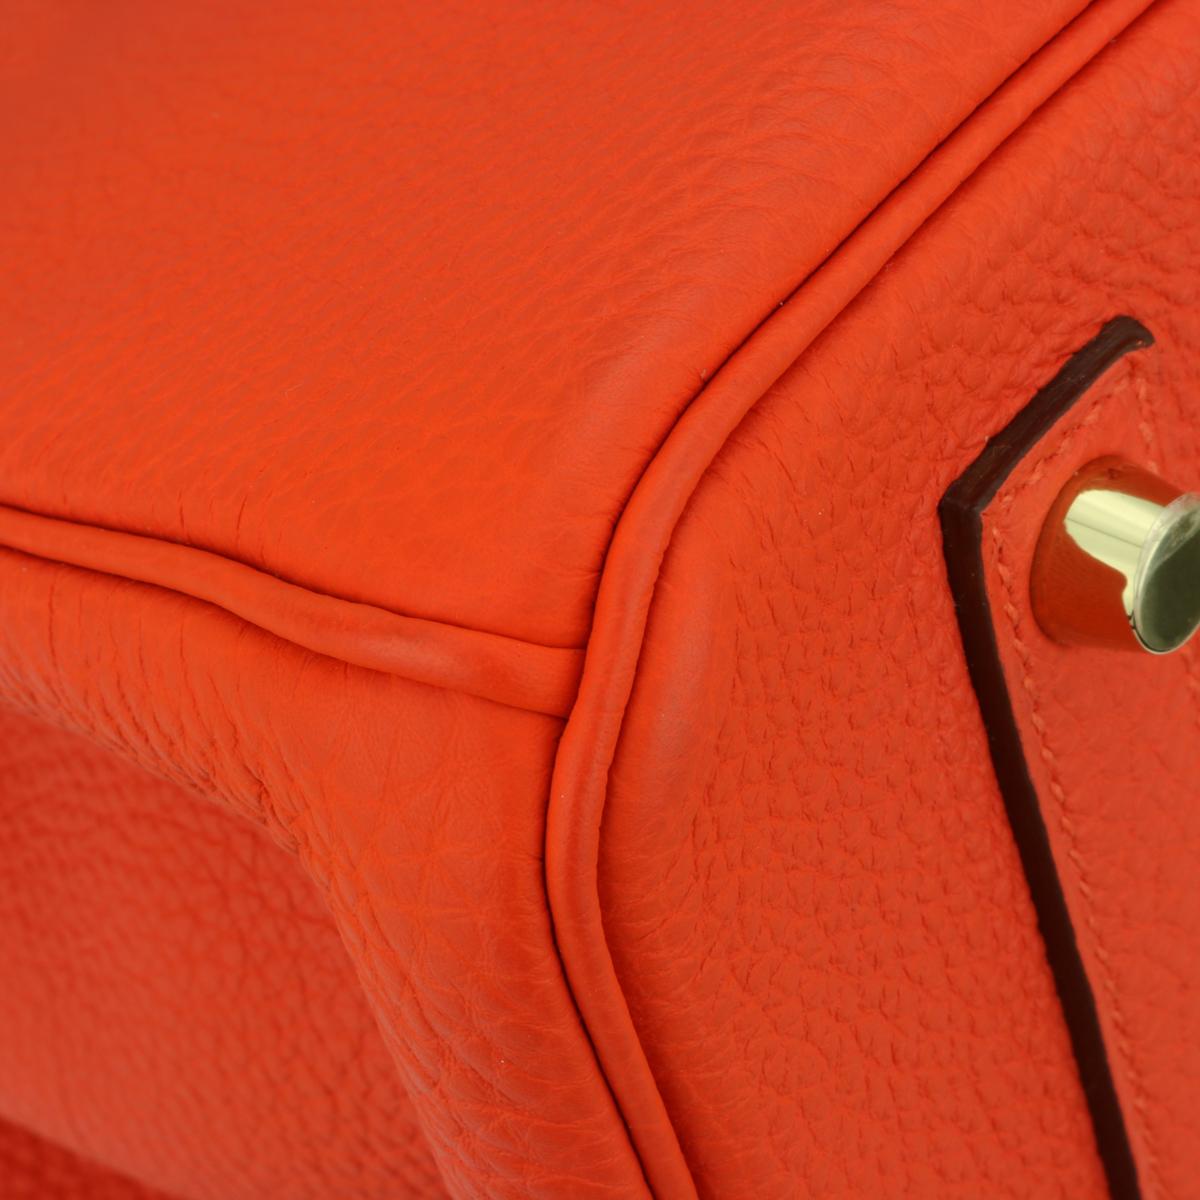 Hermès Birkin Bag 35cm Special Order HSS Bag Capucine Togo Leather w/GHW 2015 1